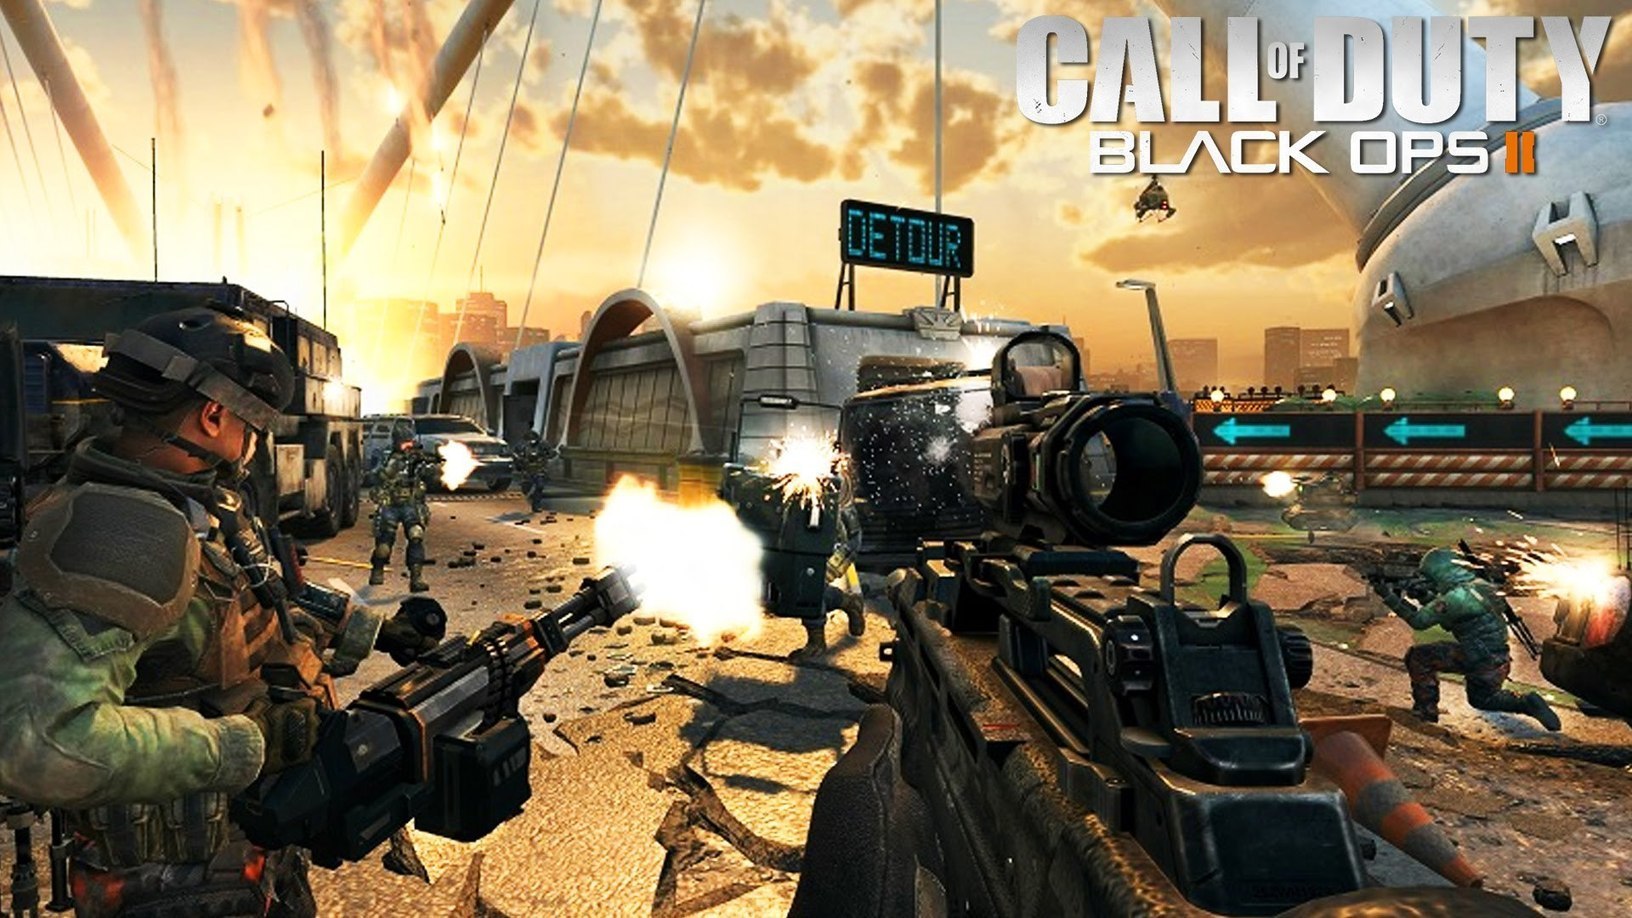 Call Of Duty Mobile Season End Rank Reset Callofdutyhack.Xyz ... - 